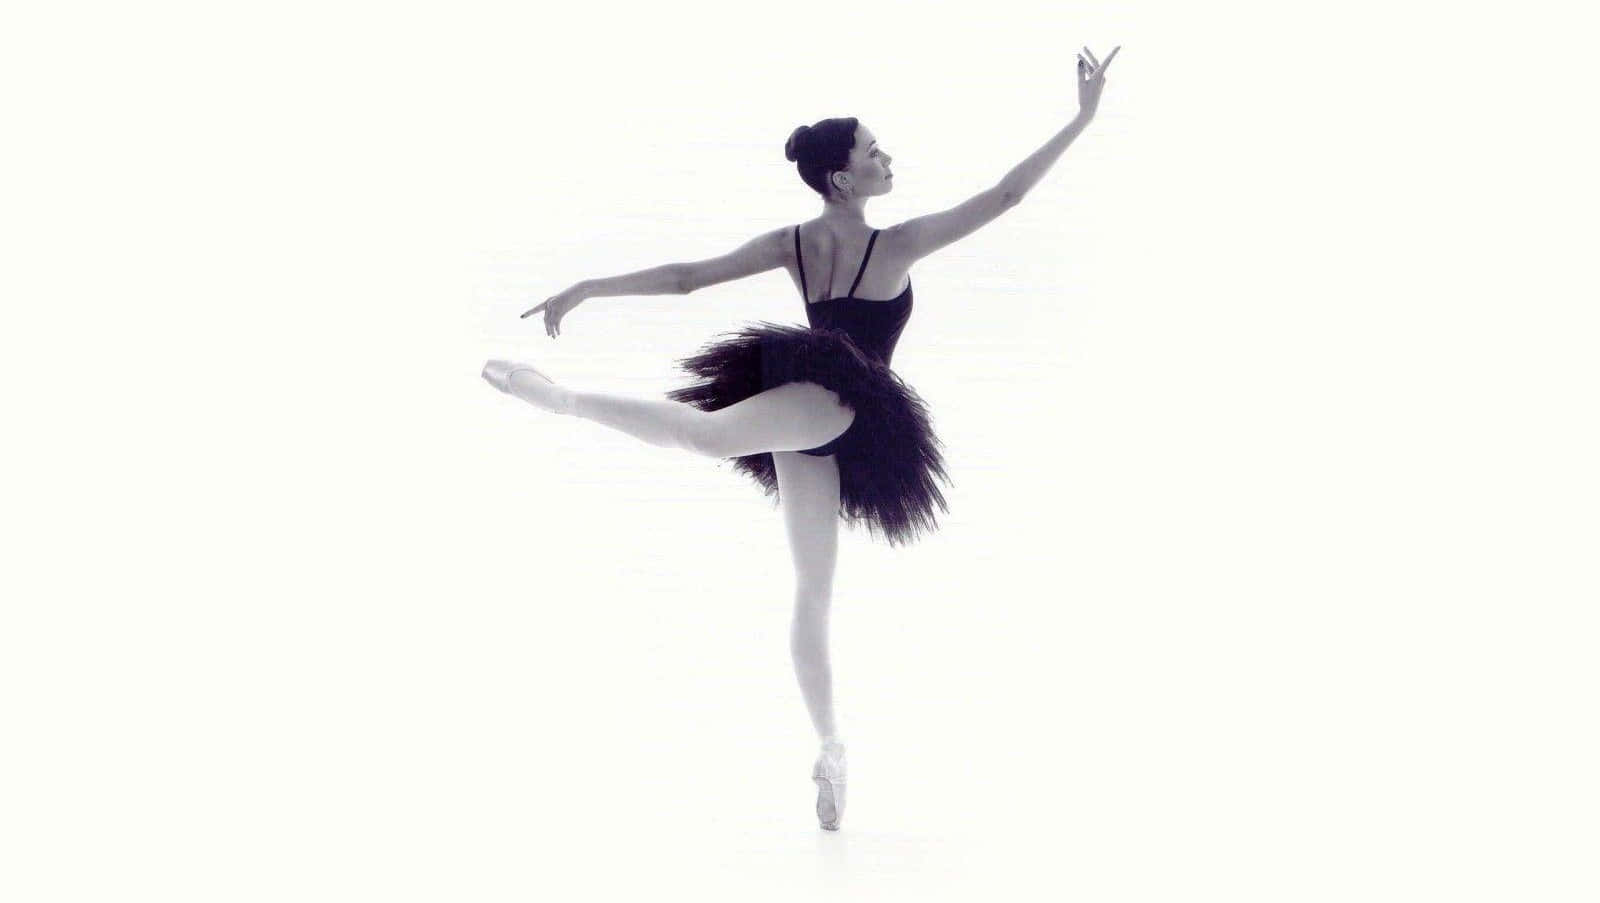 A graceful ballerina pirouette amidst the graceful snowfall.